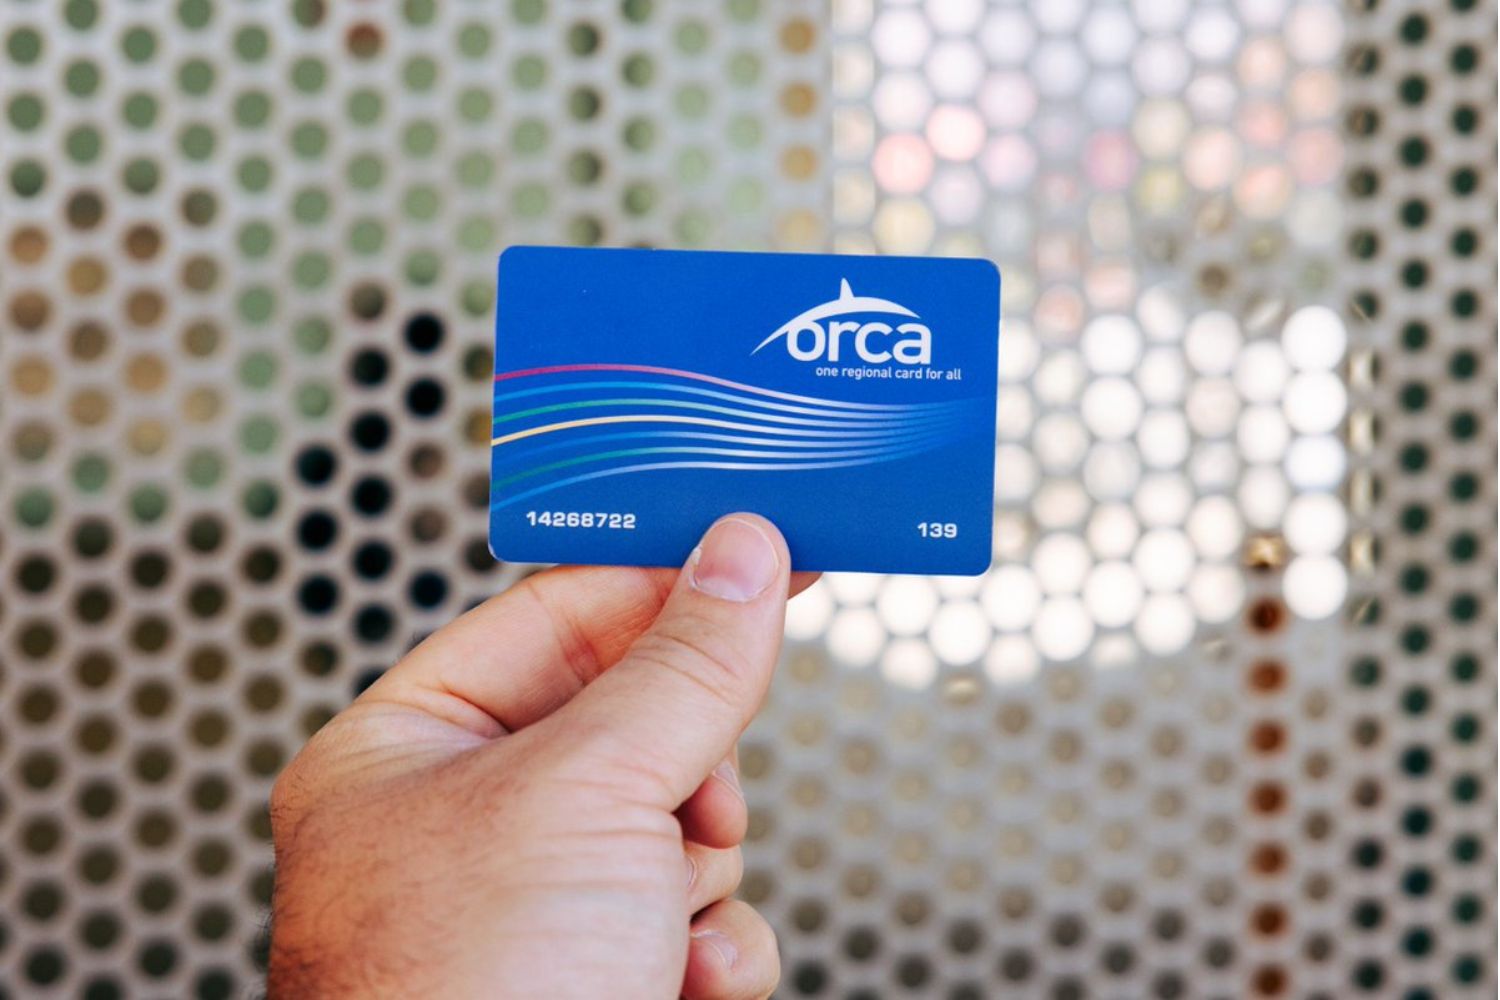 A man's hand holds a blue Classic ORCA Card.